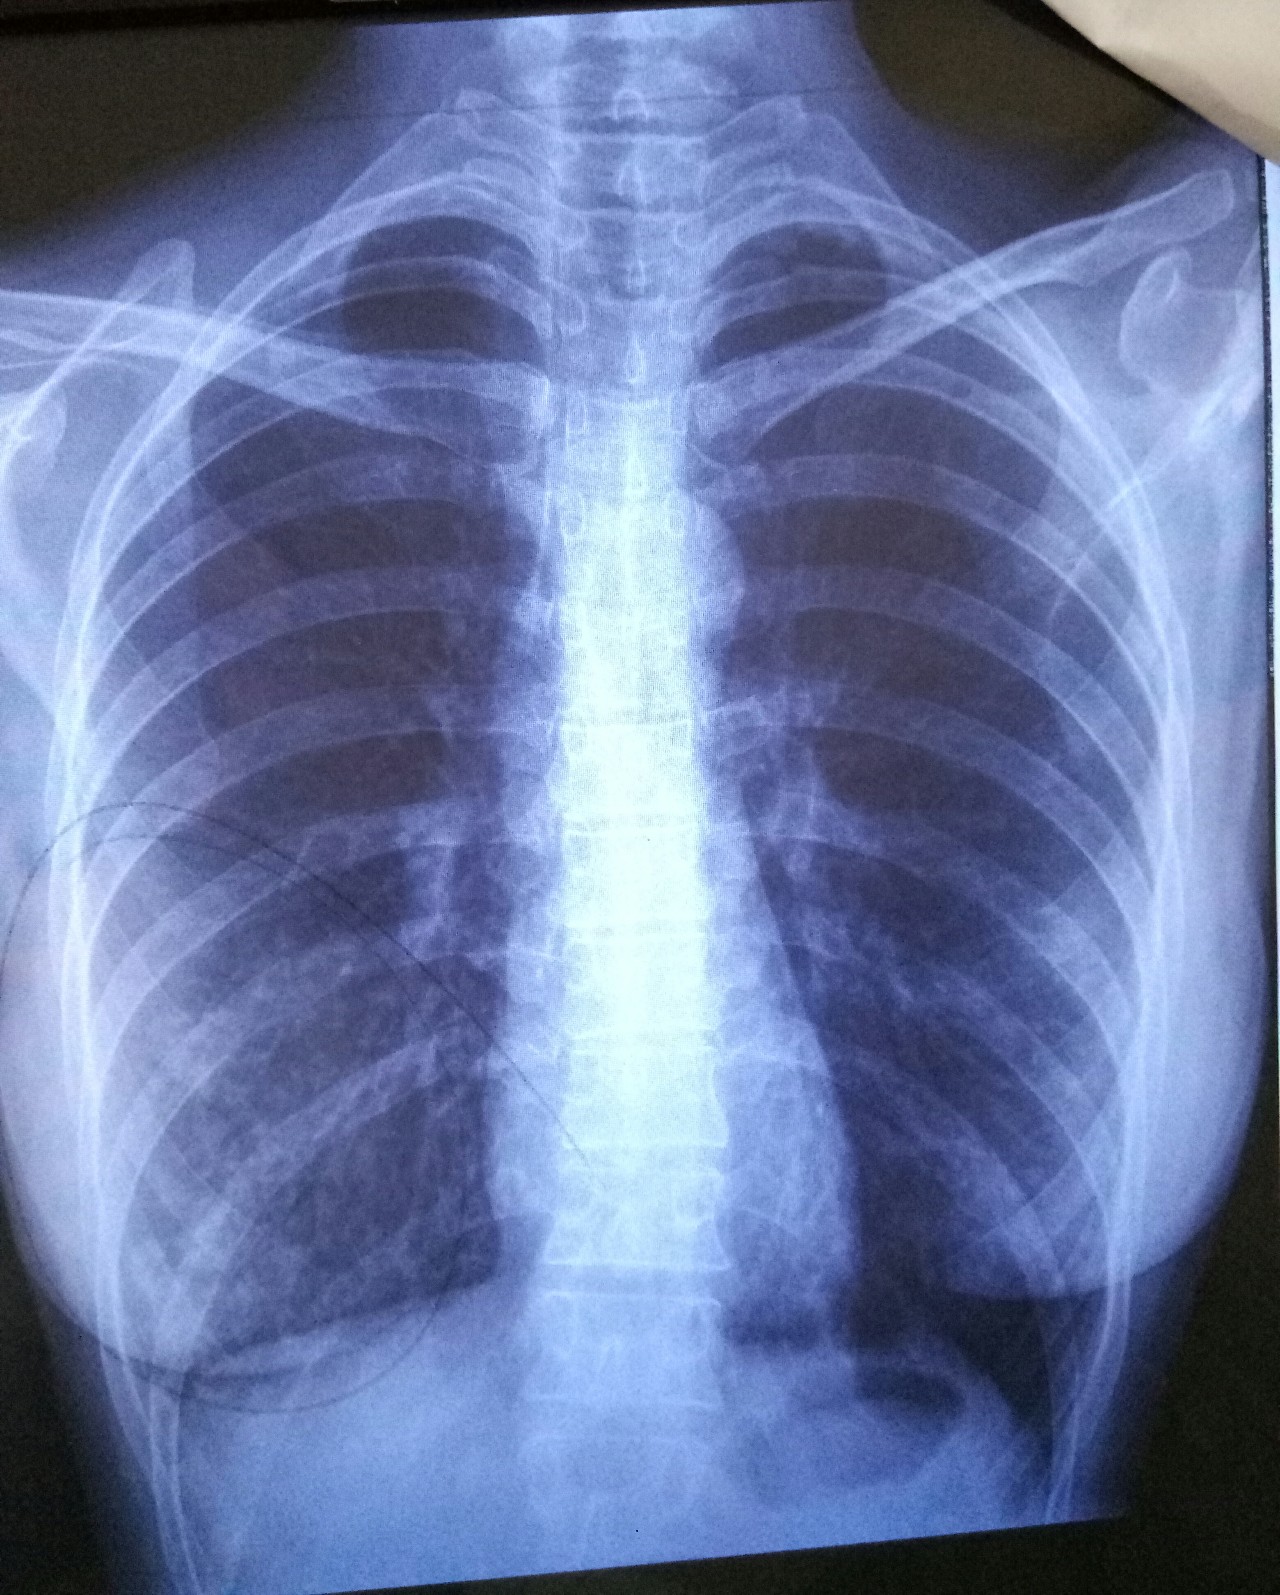 снимок легких при туберкулезе фото